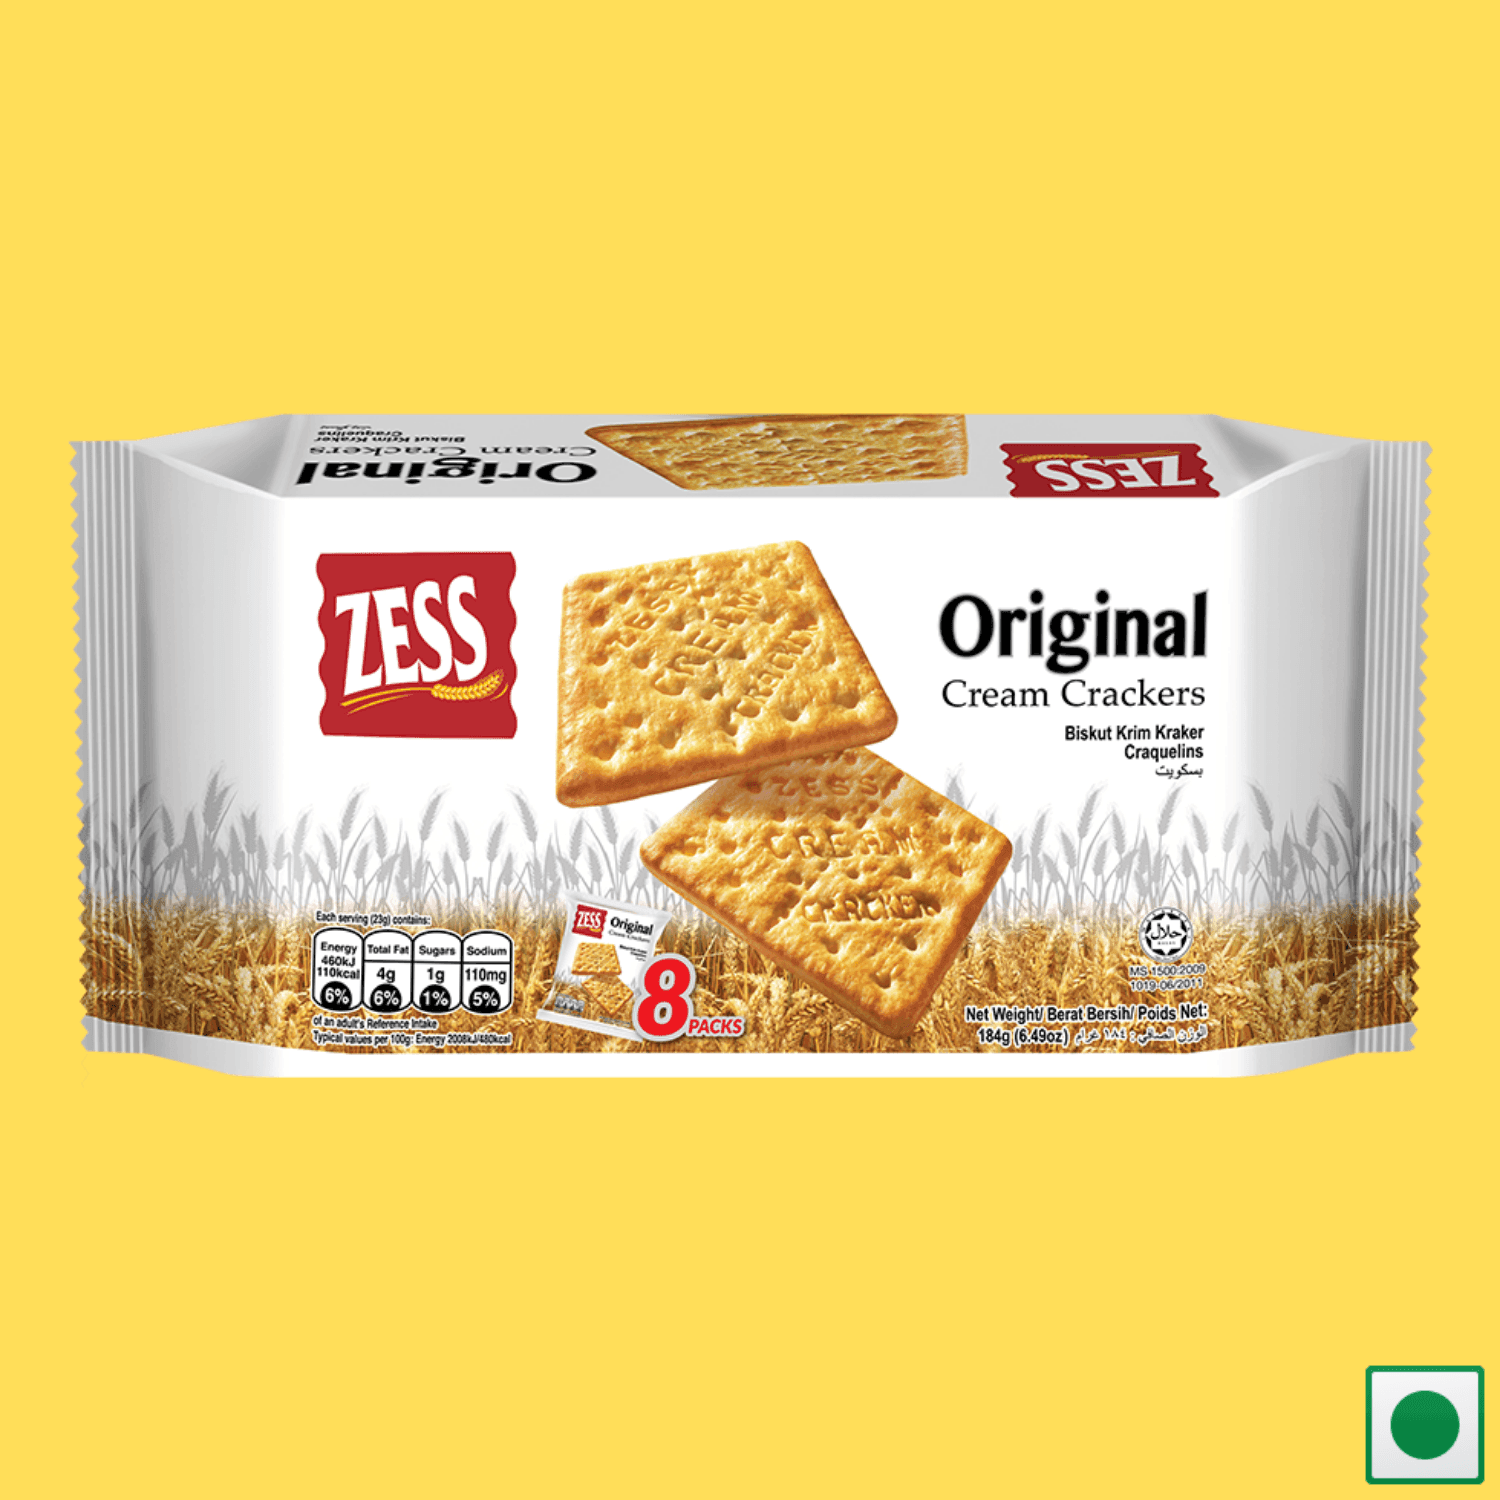 Zess Original Cream Crackers, 184g (Imported) - Super 7 Mart